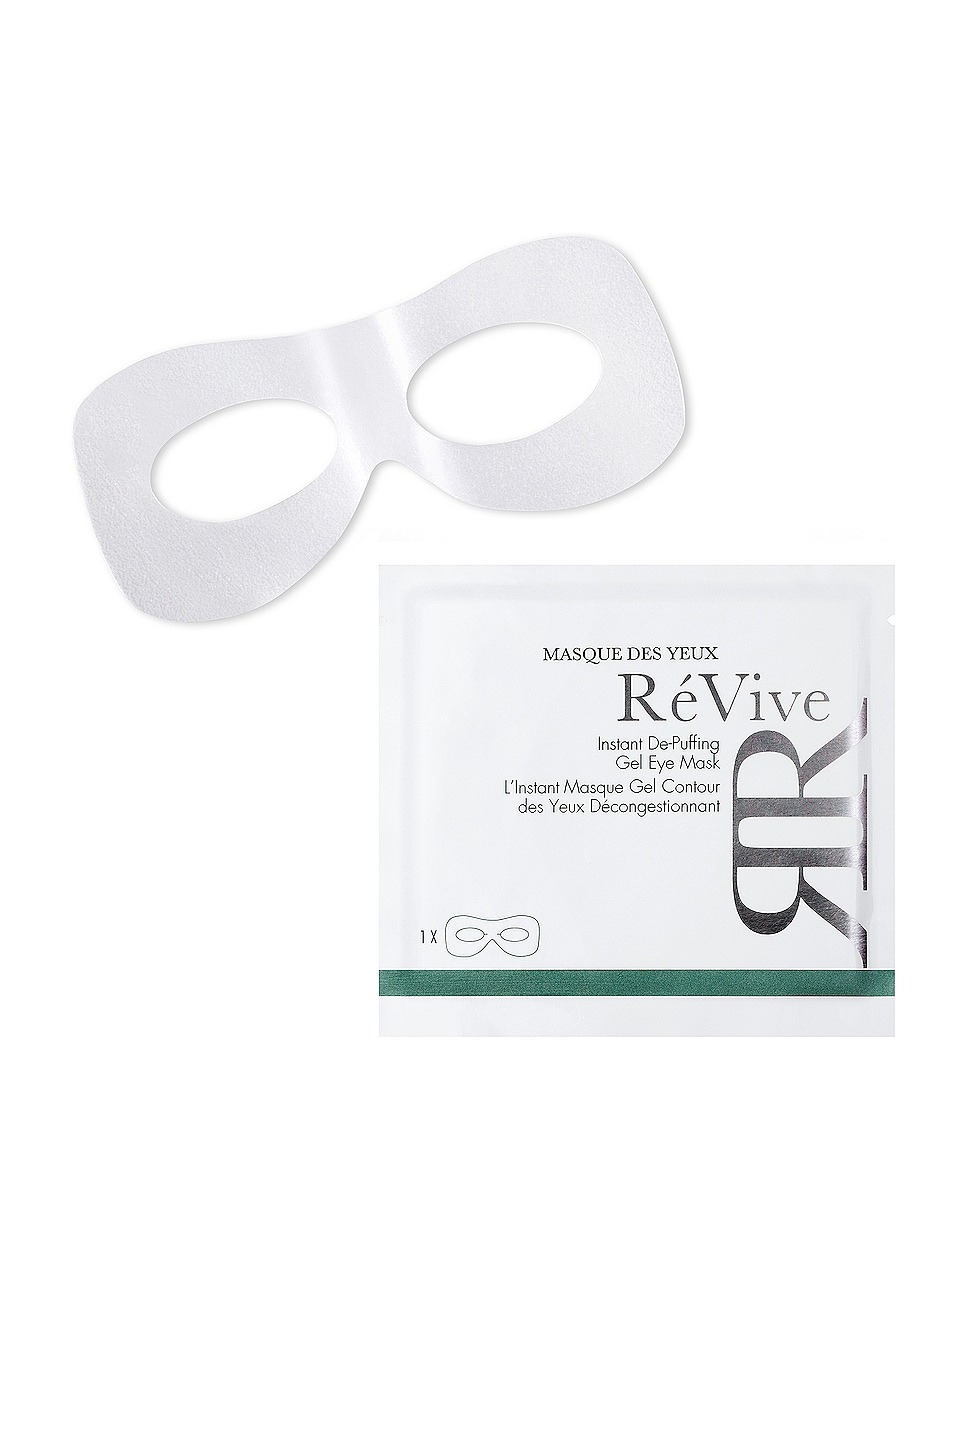 ReVive Masque Des Yeux Instant De-puffing Gel Eye Mask 6 Pack